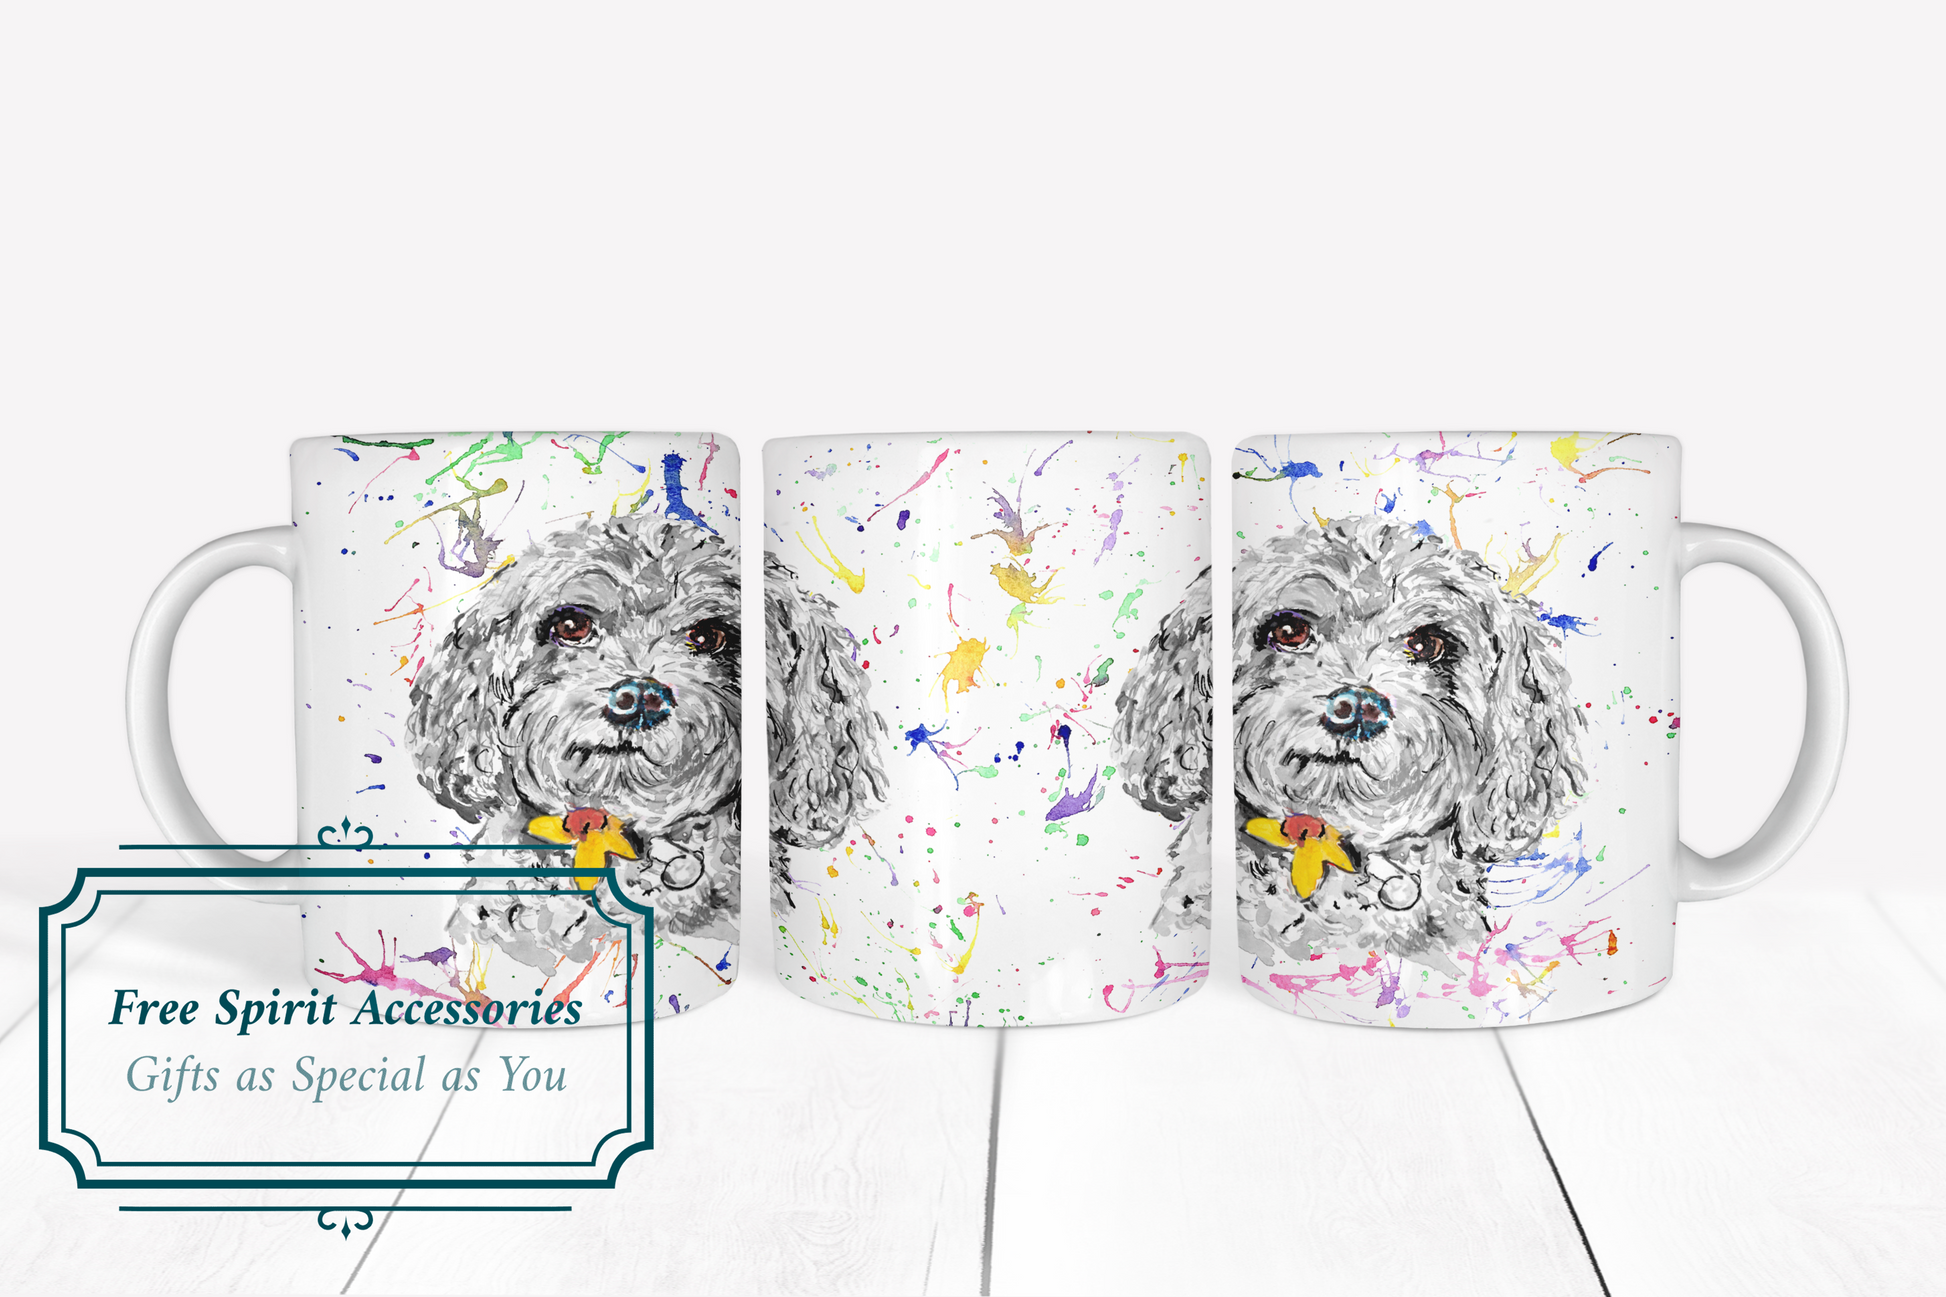  Cavapoo Dog With Daffodil Coffee Mug by Free Spirit Accessories sold by Free Spirit Accessories